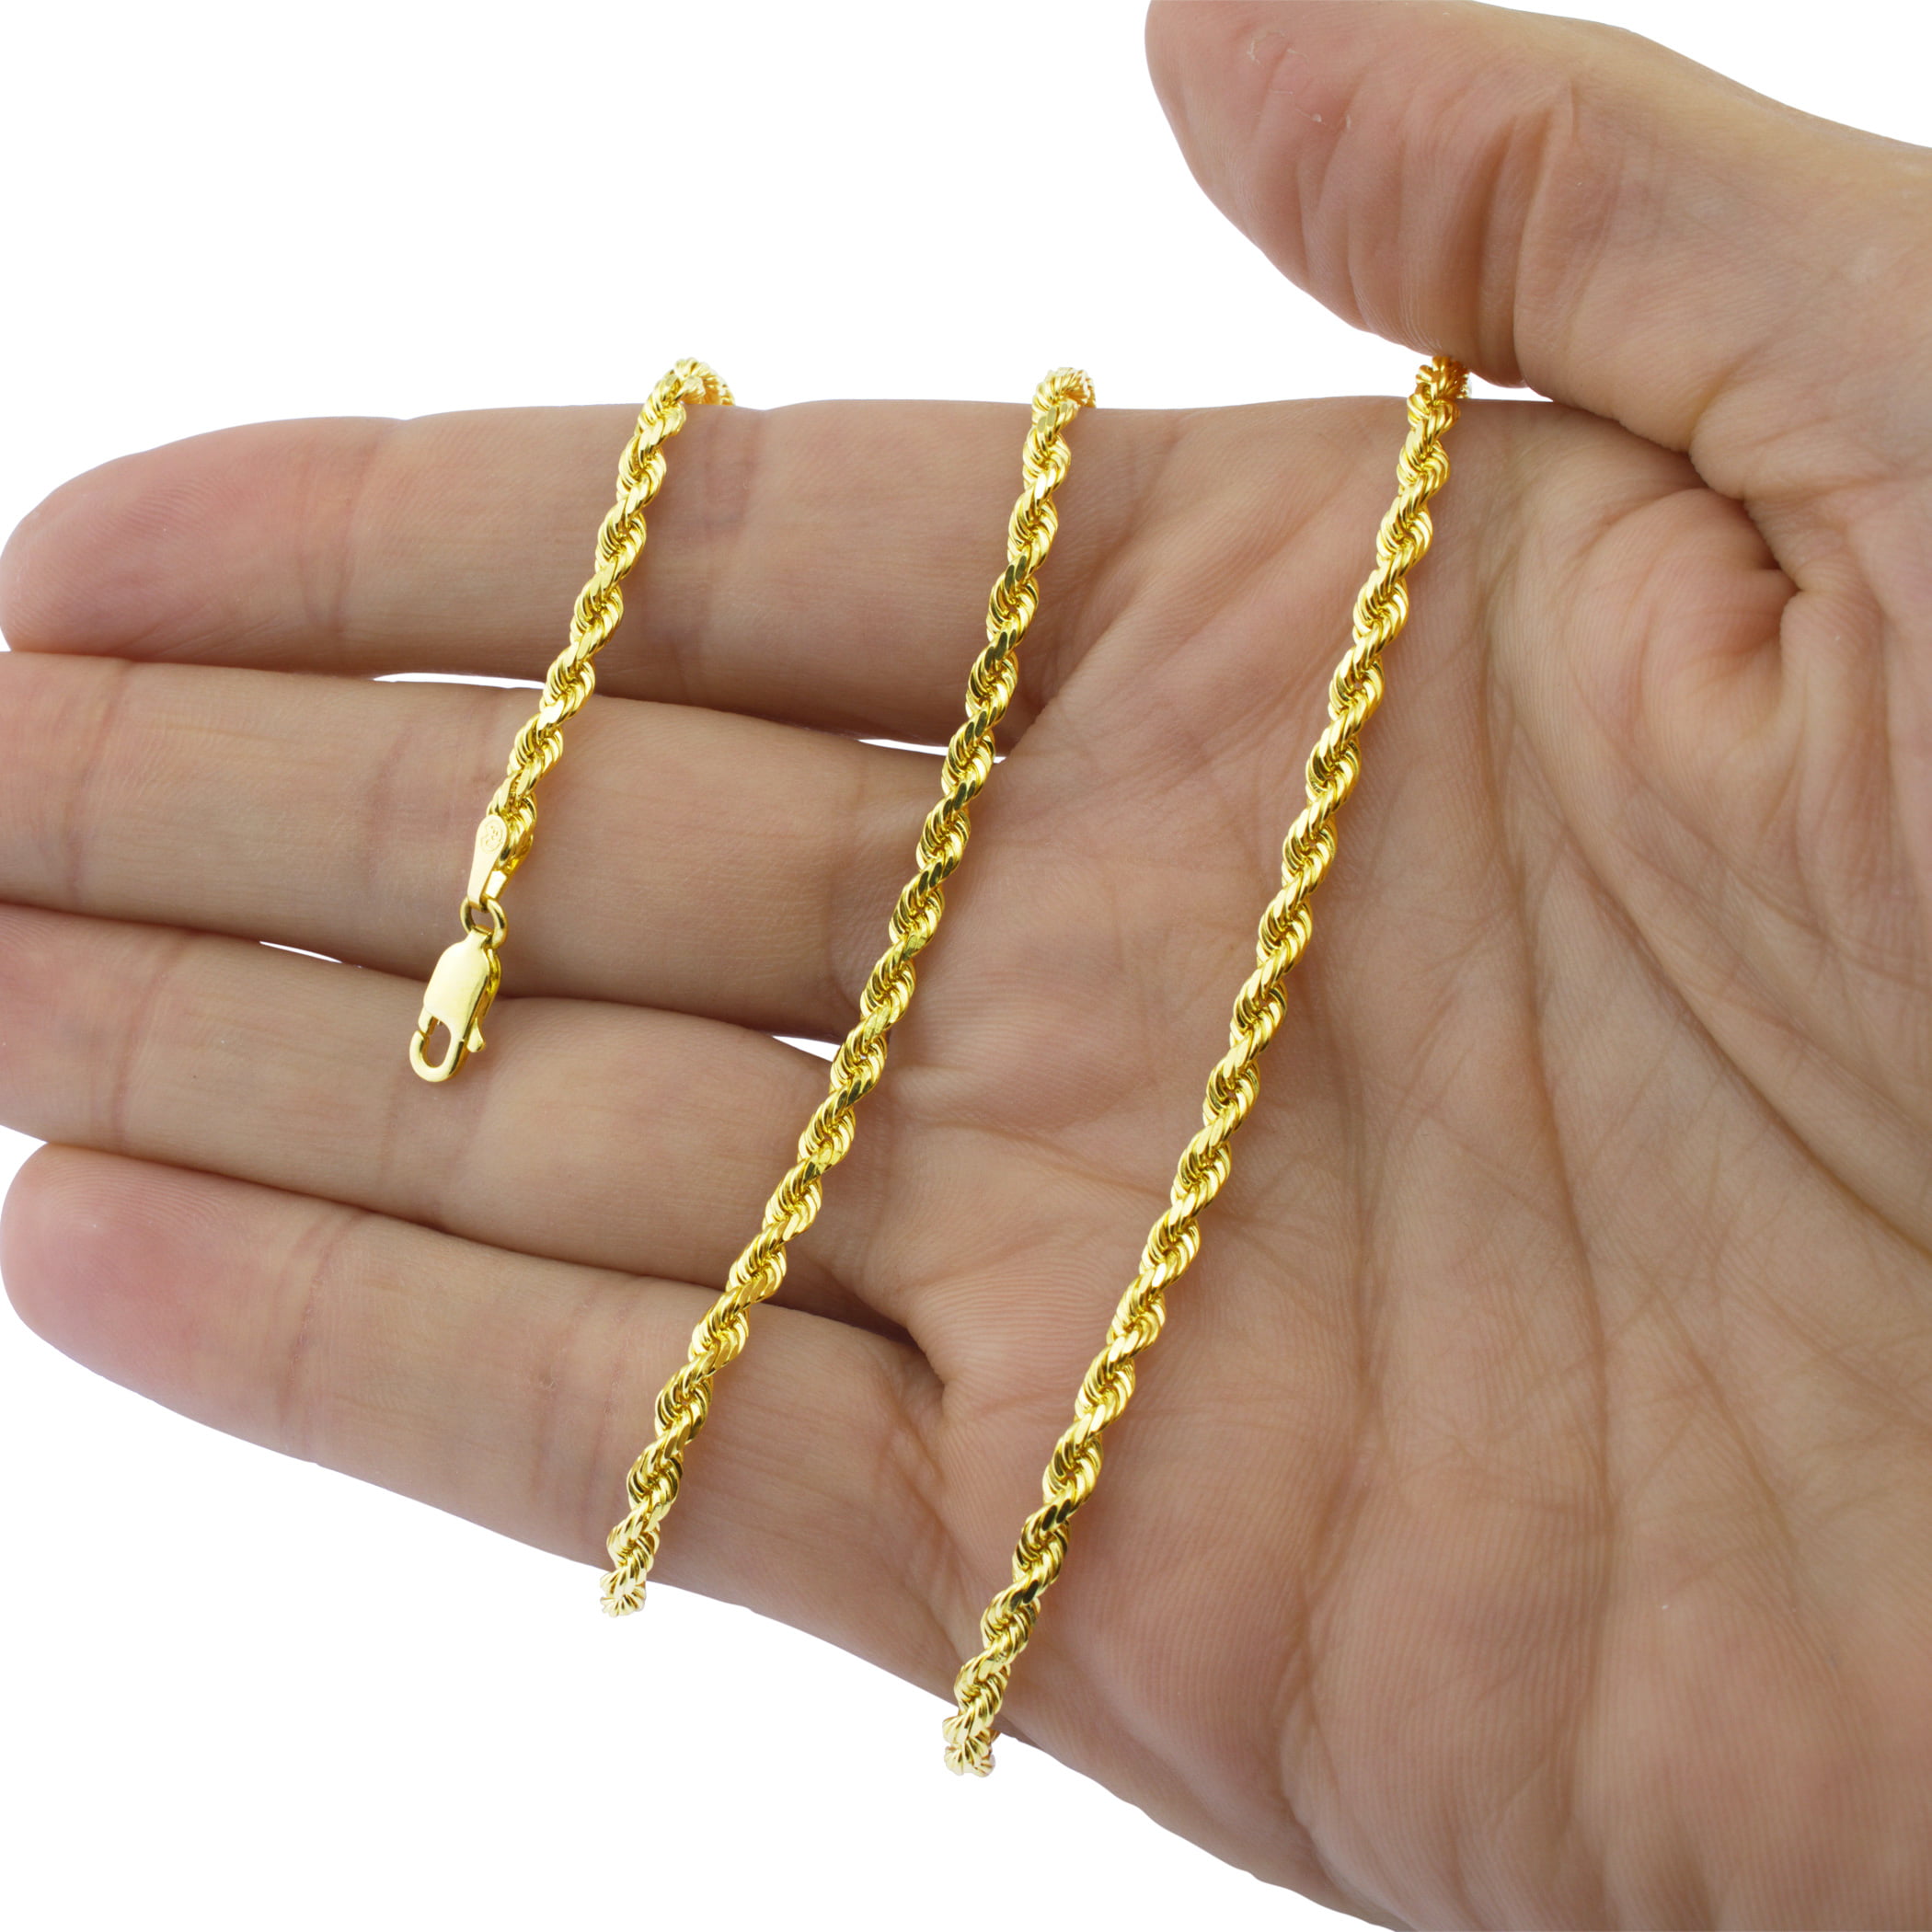 Nuragold 14k Yellow Gold 4mm Solid Rope Chain Diamond Cut Pendant 